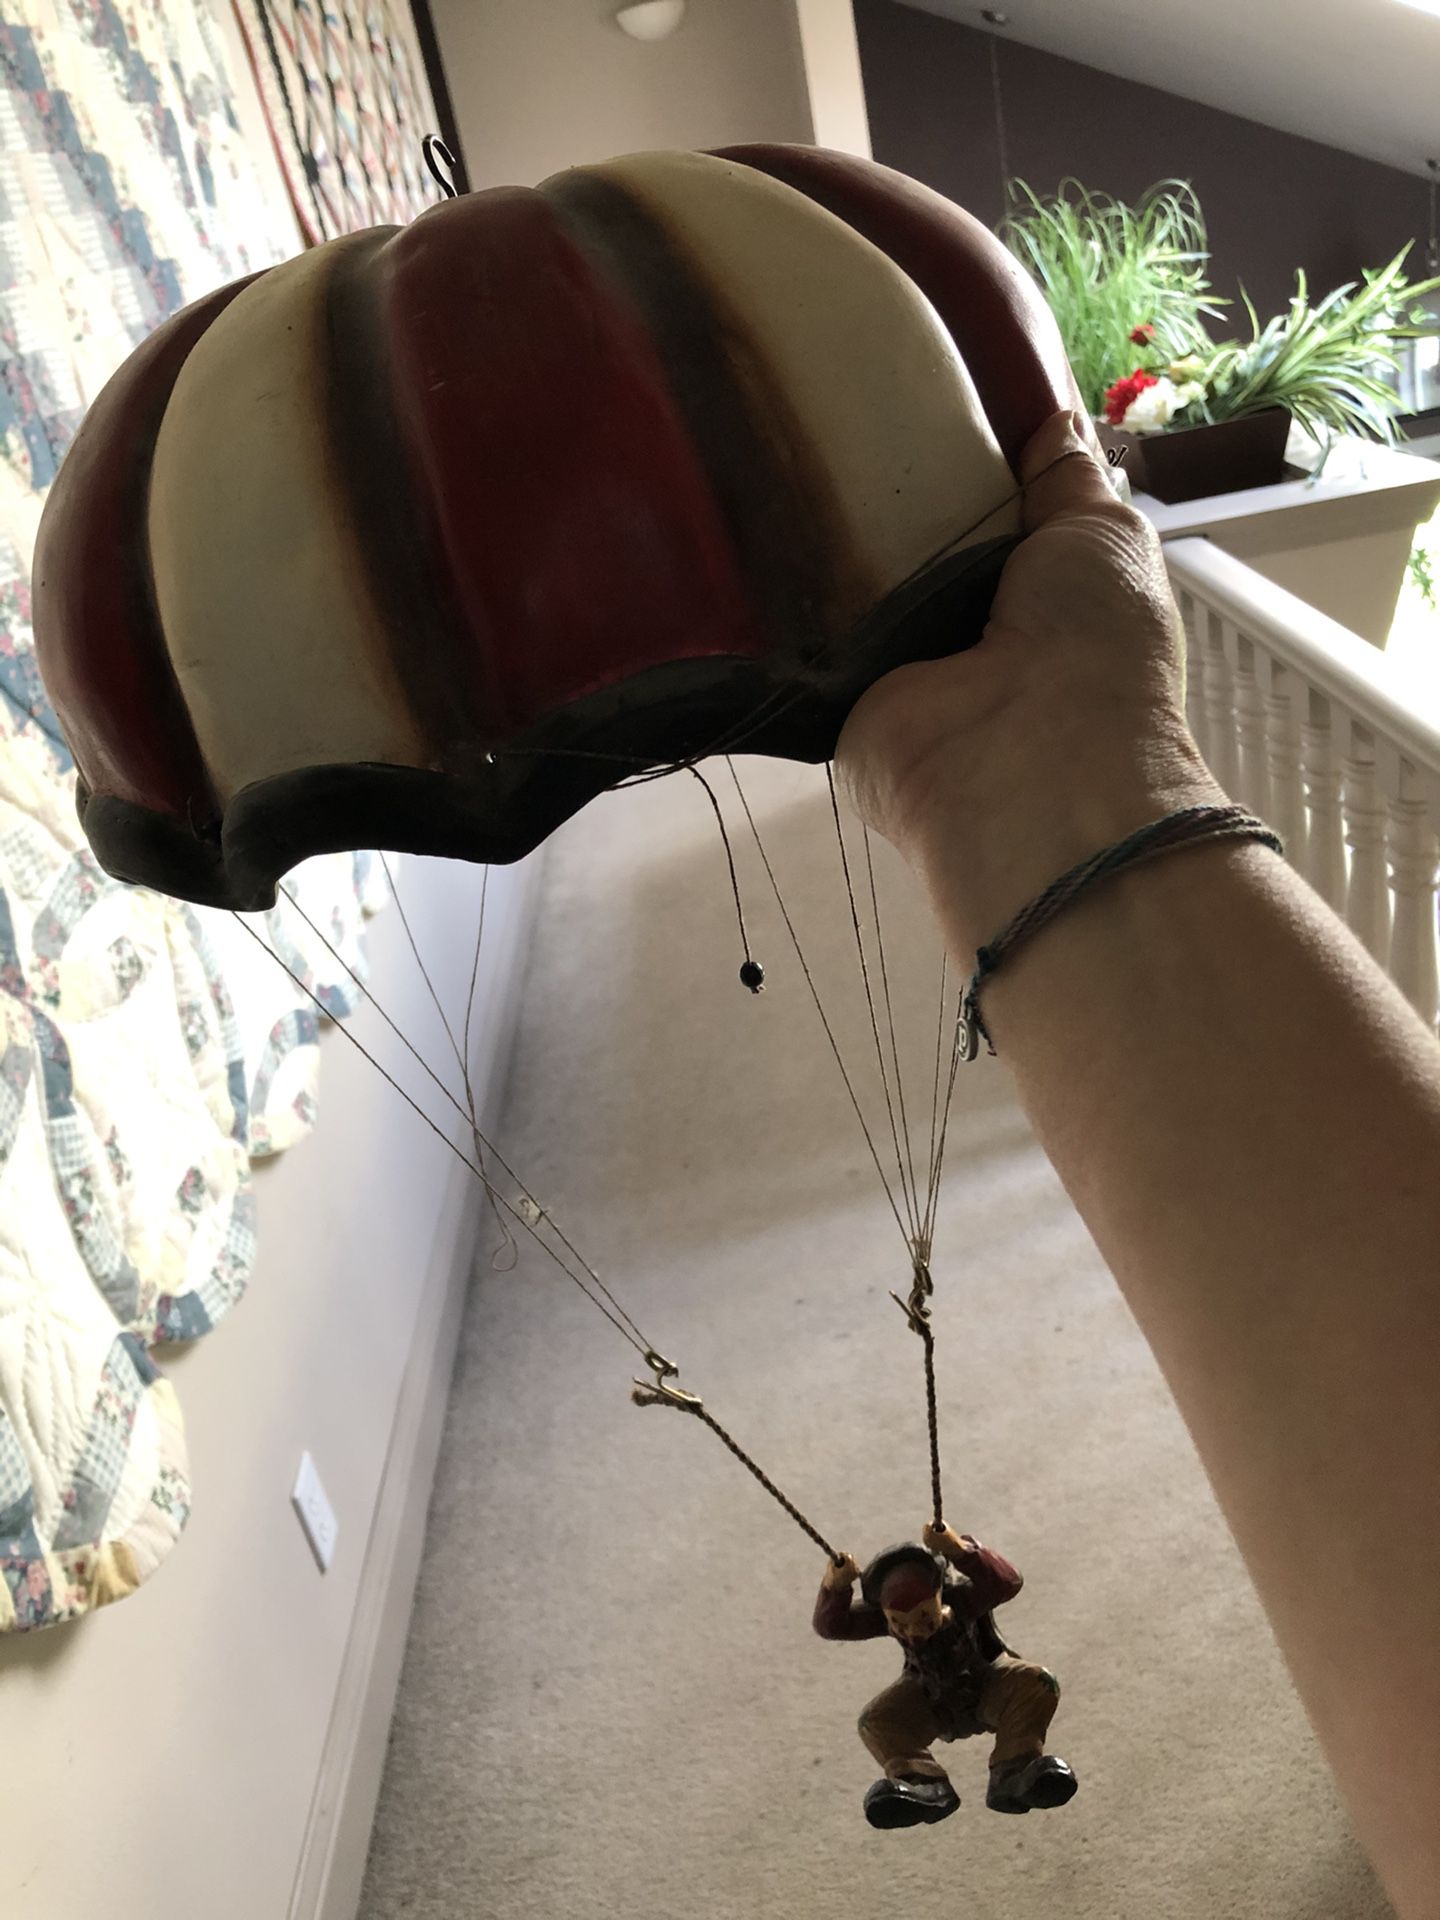 Hanging clown balloon